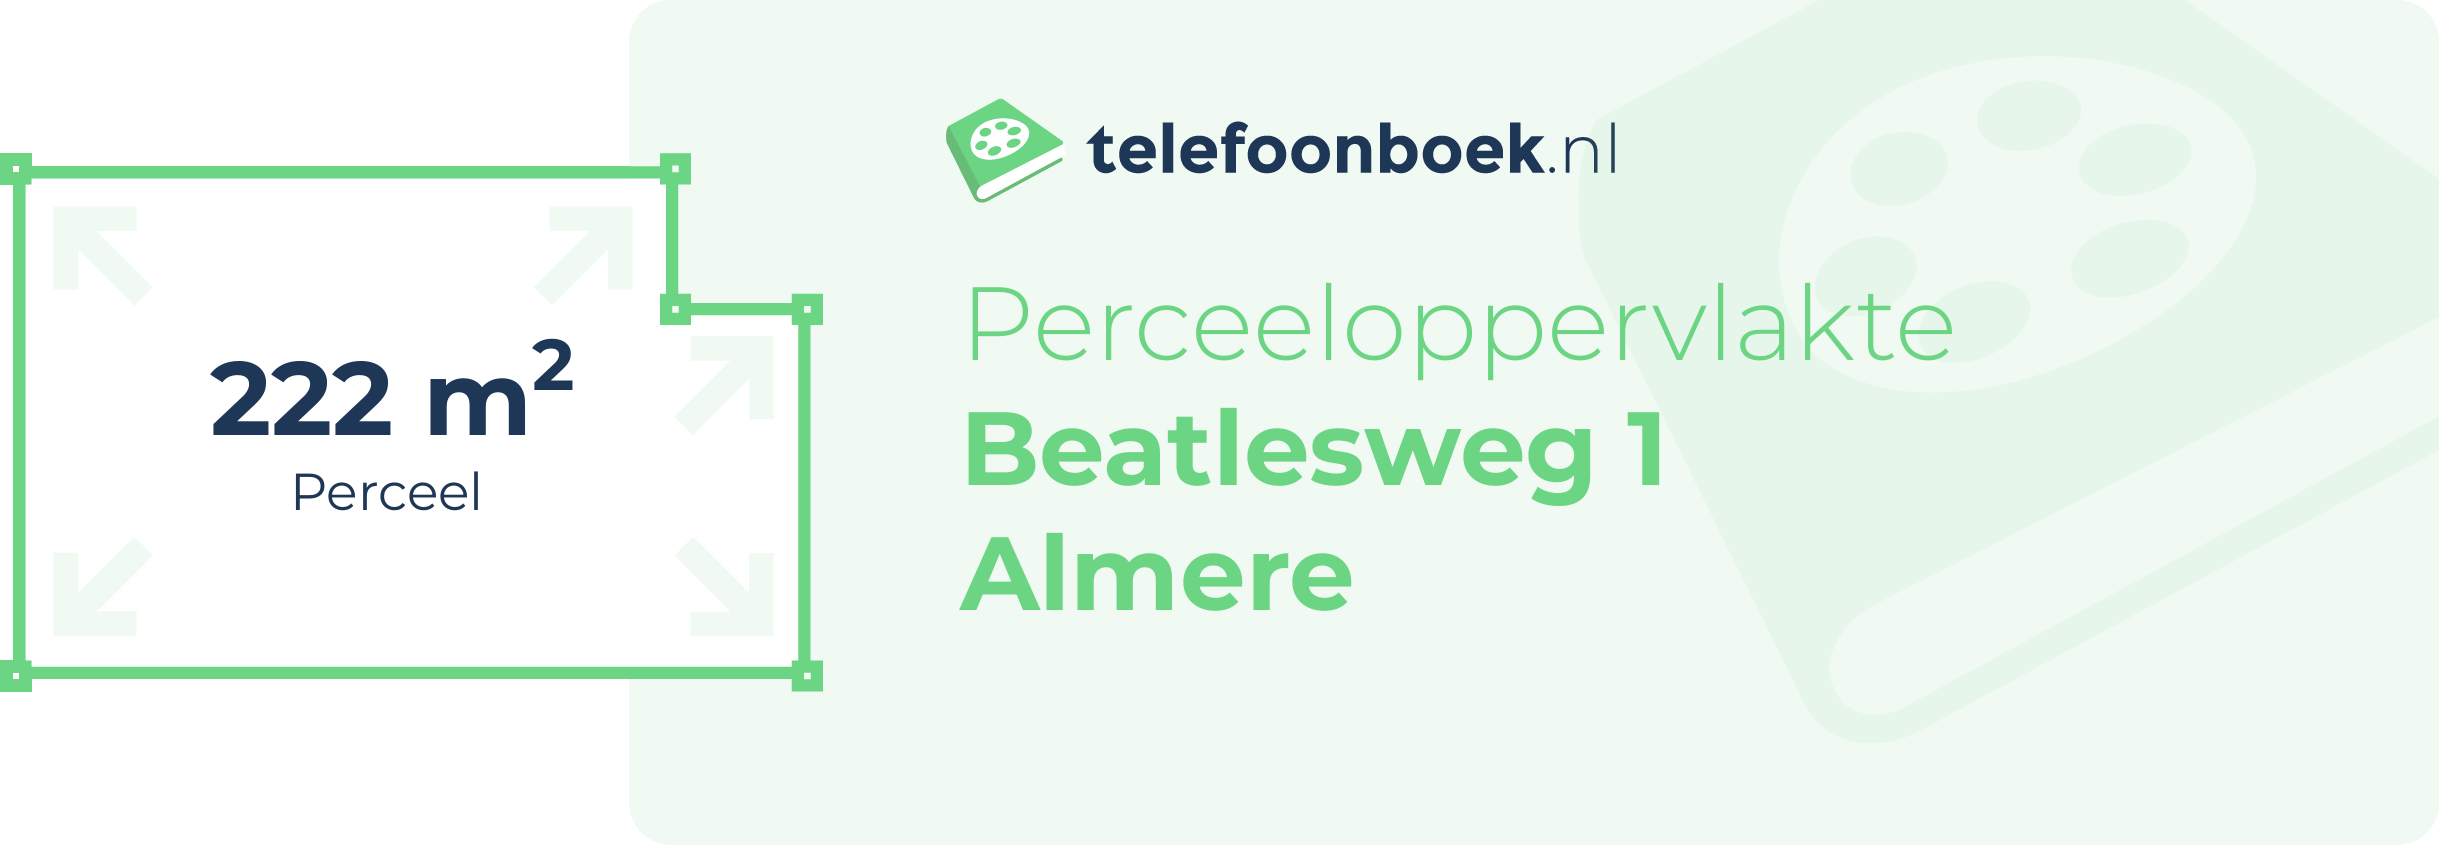 Perceeloppervlakte Beatlesweg 1 Almere